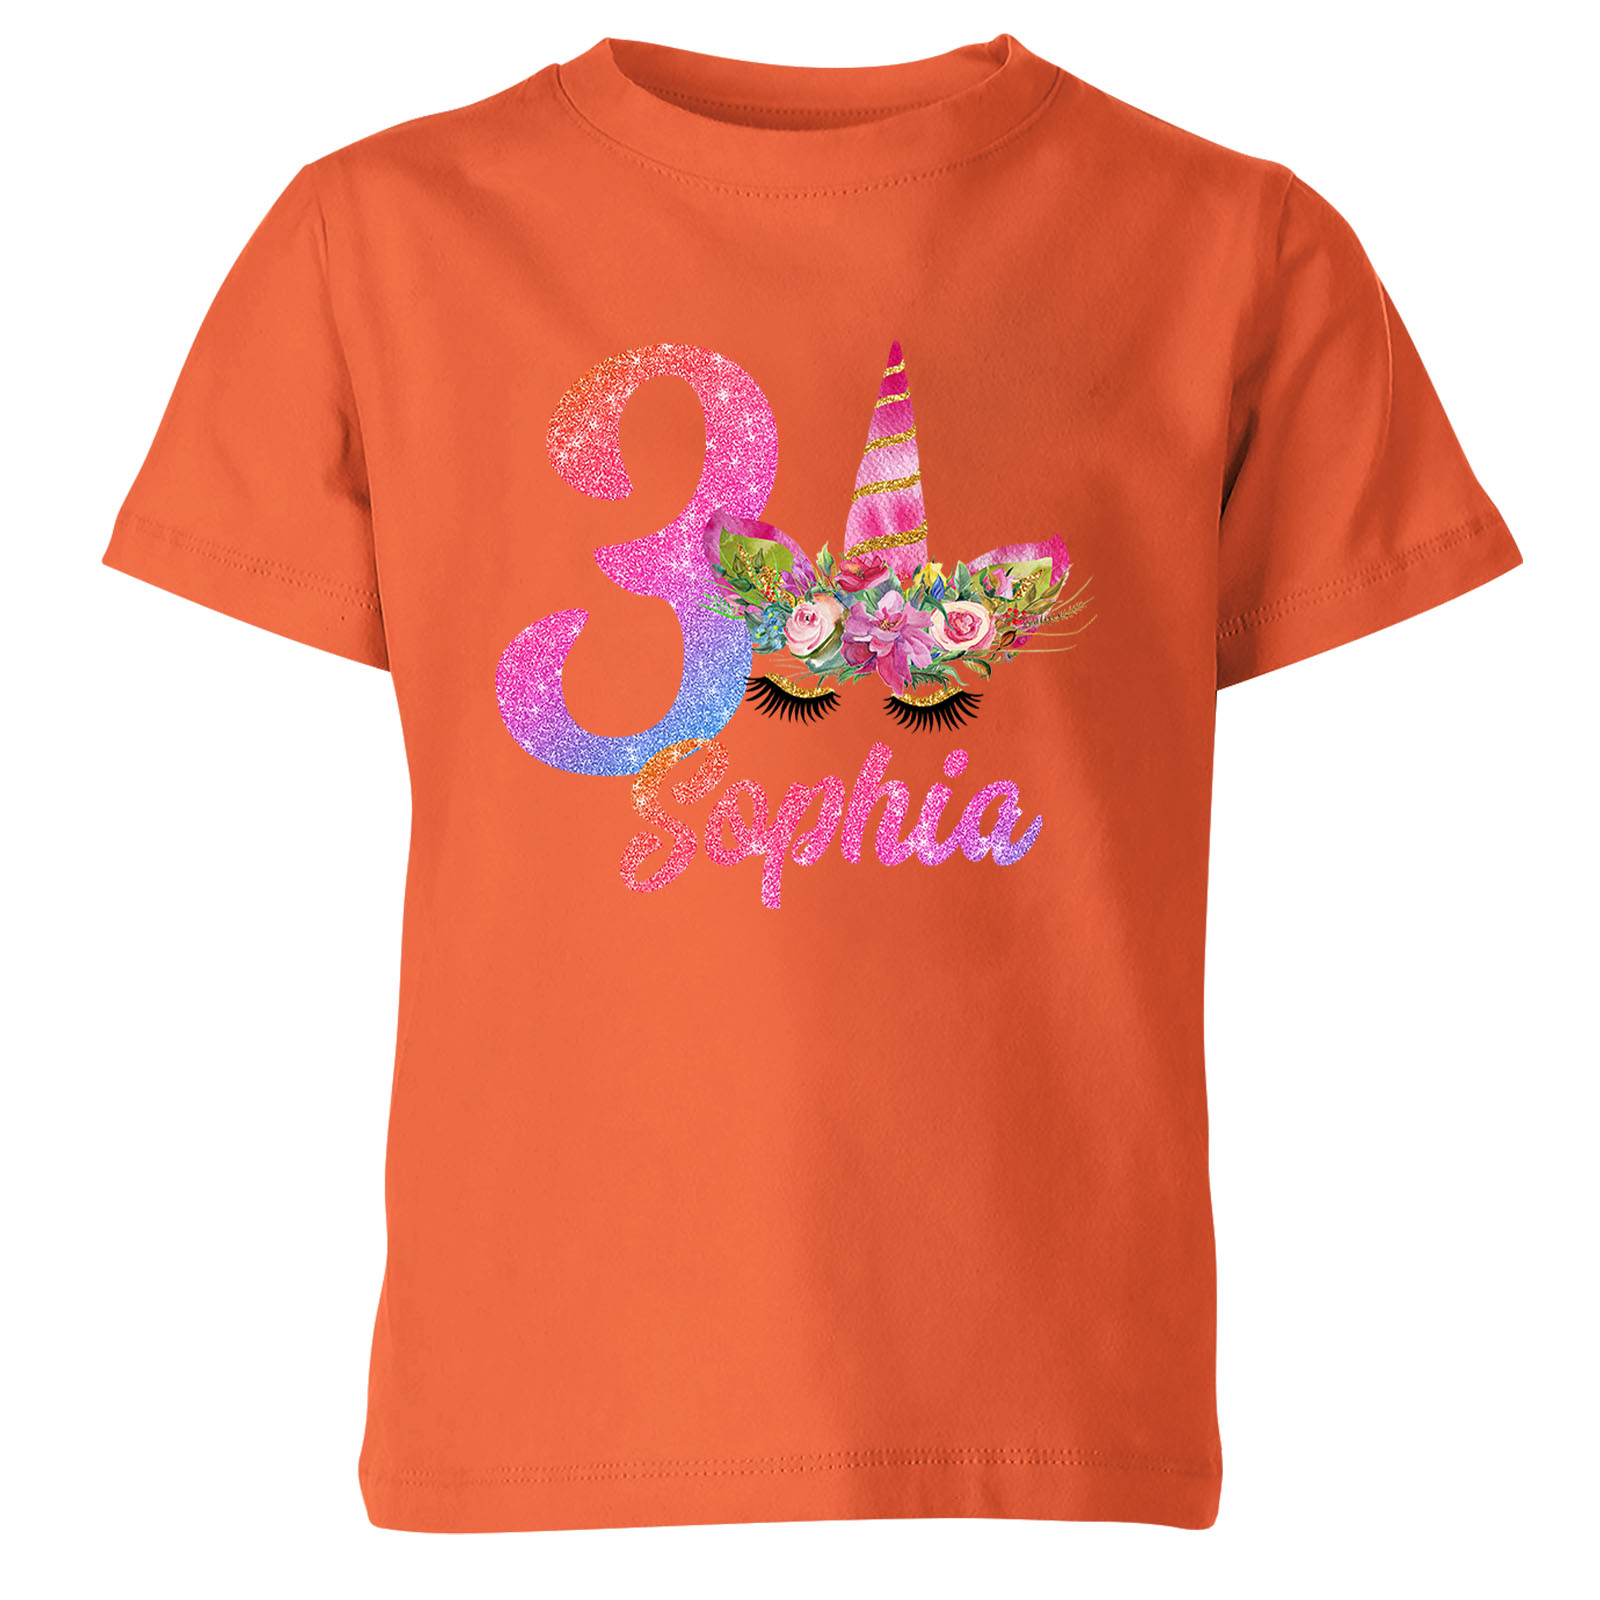 Girls Unicorn Rainbow Personalized Kids Toddler T Shirt Tee Name Age  Designs